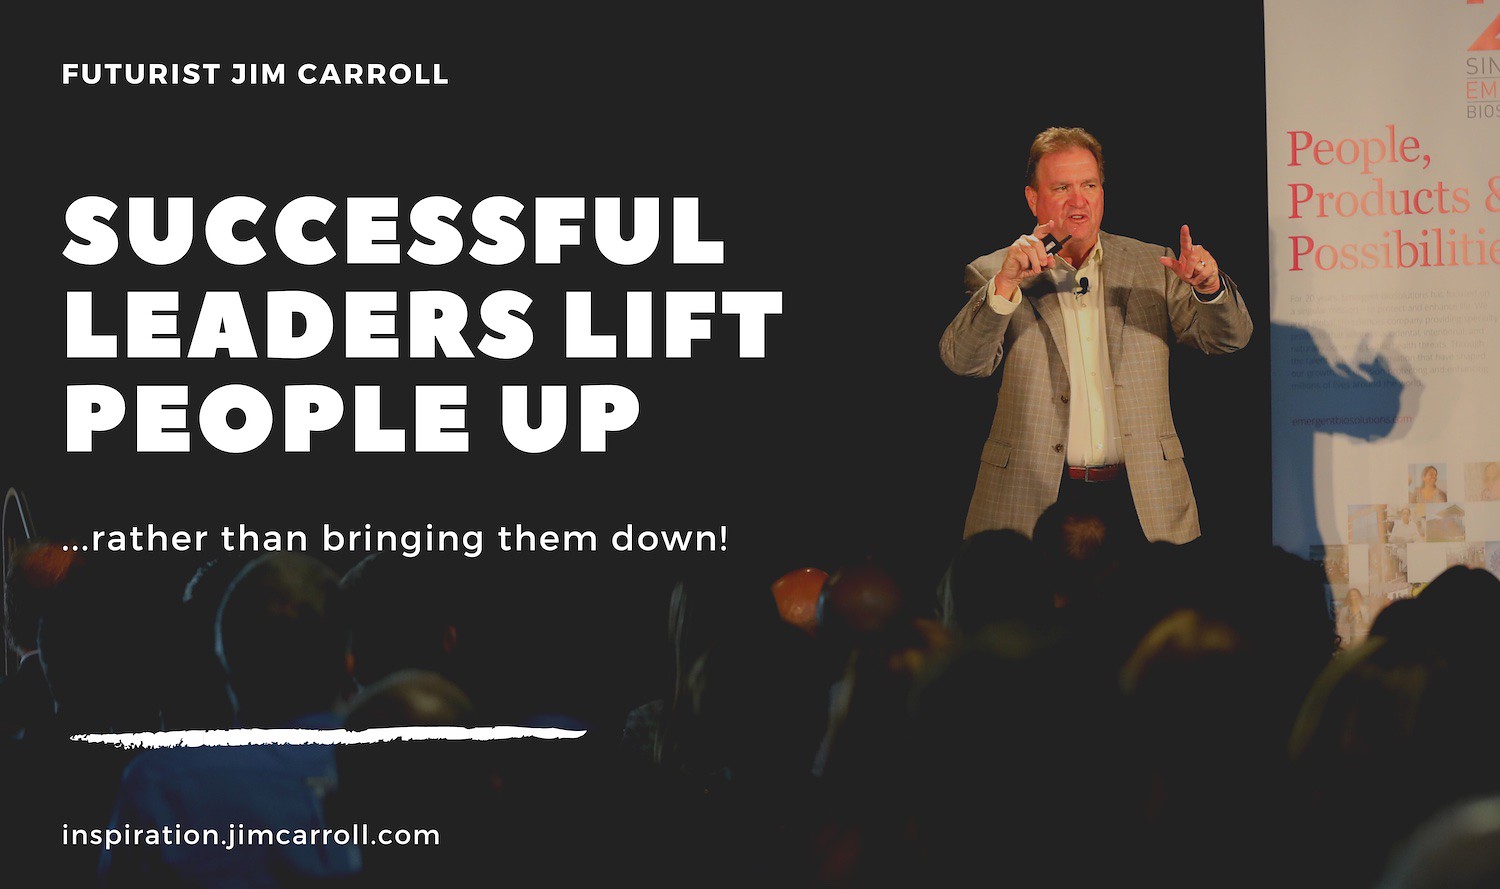 "Successful leaders lift people up ... rather than bringing them down!" - Futurist Jim Carroll